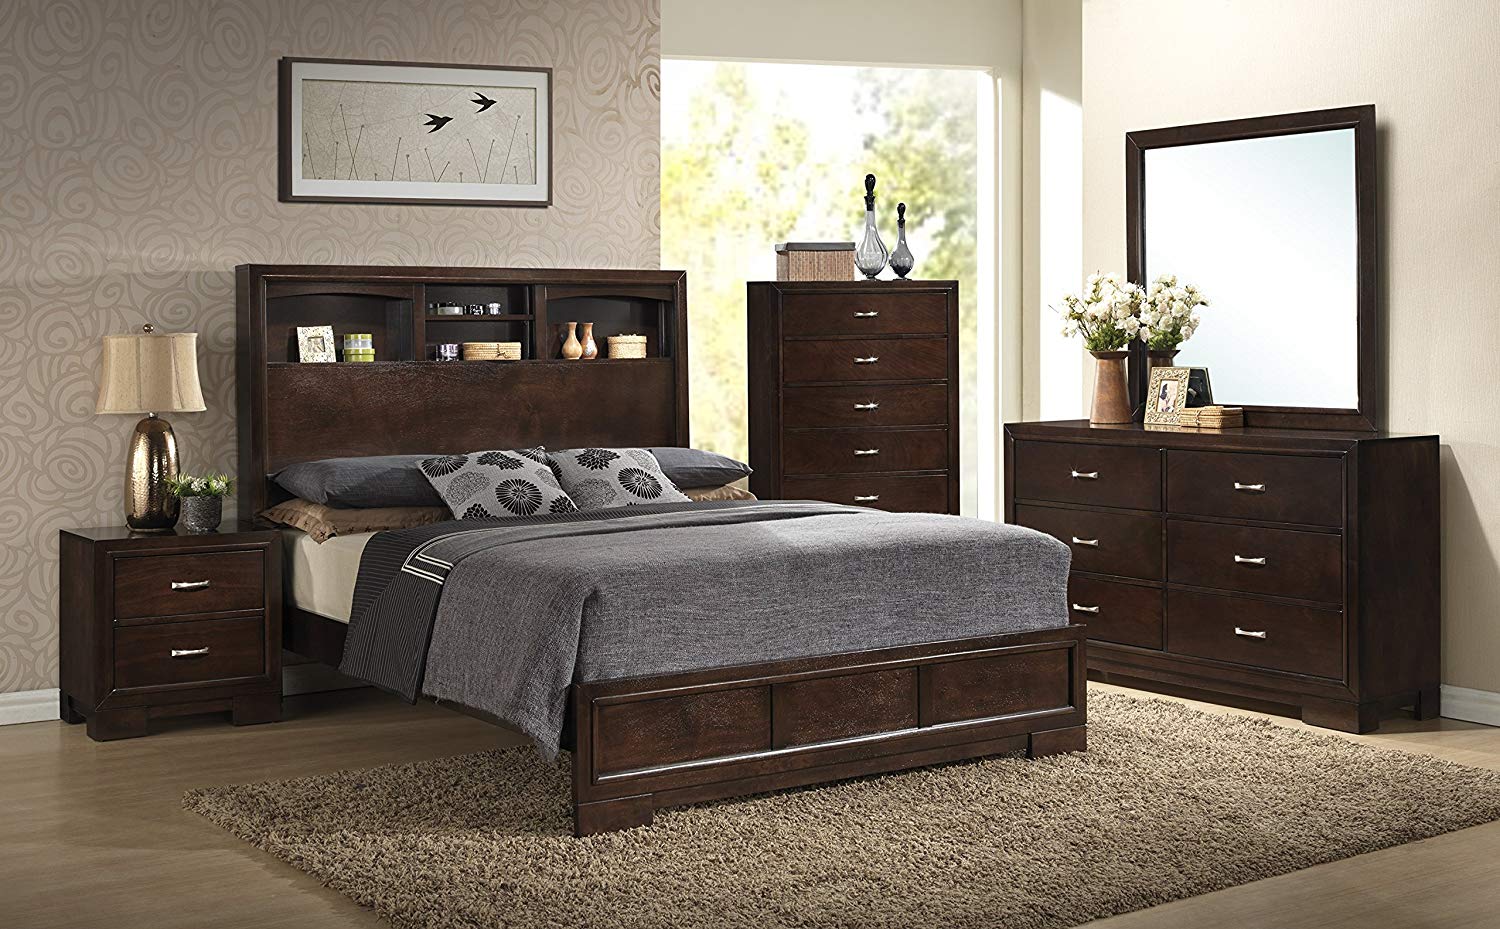 b&q oslo bedroom furniture